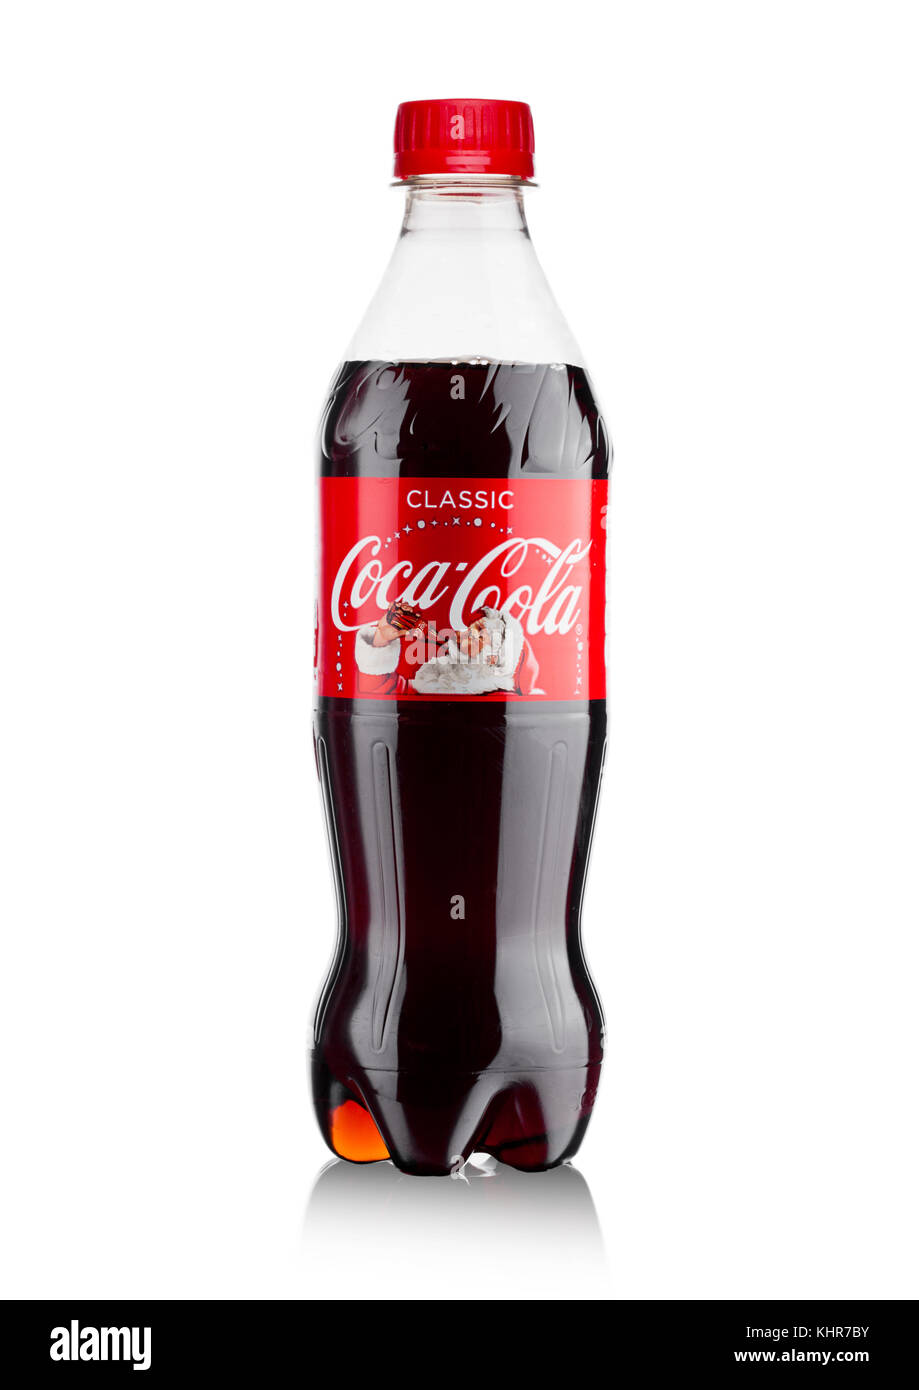 New Coca Cola Woodstock Festival 2017 Can Limited Edition cocacola coca-cola